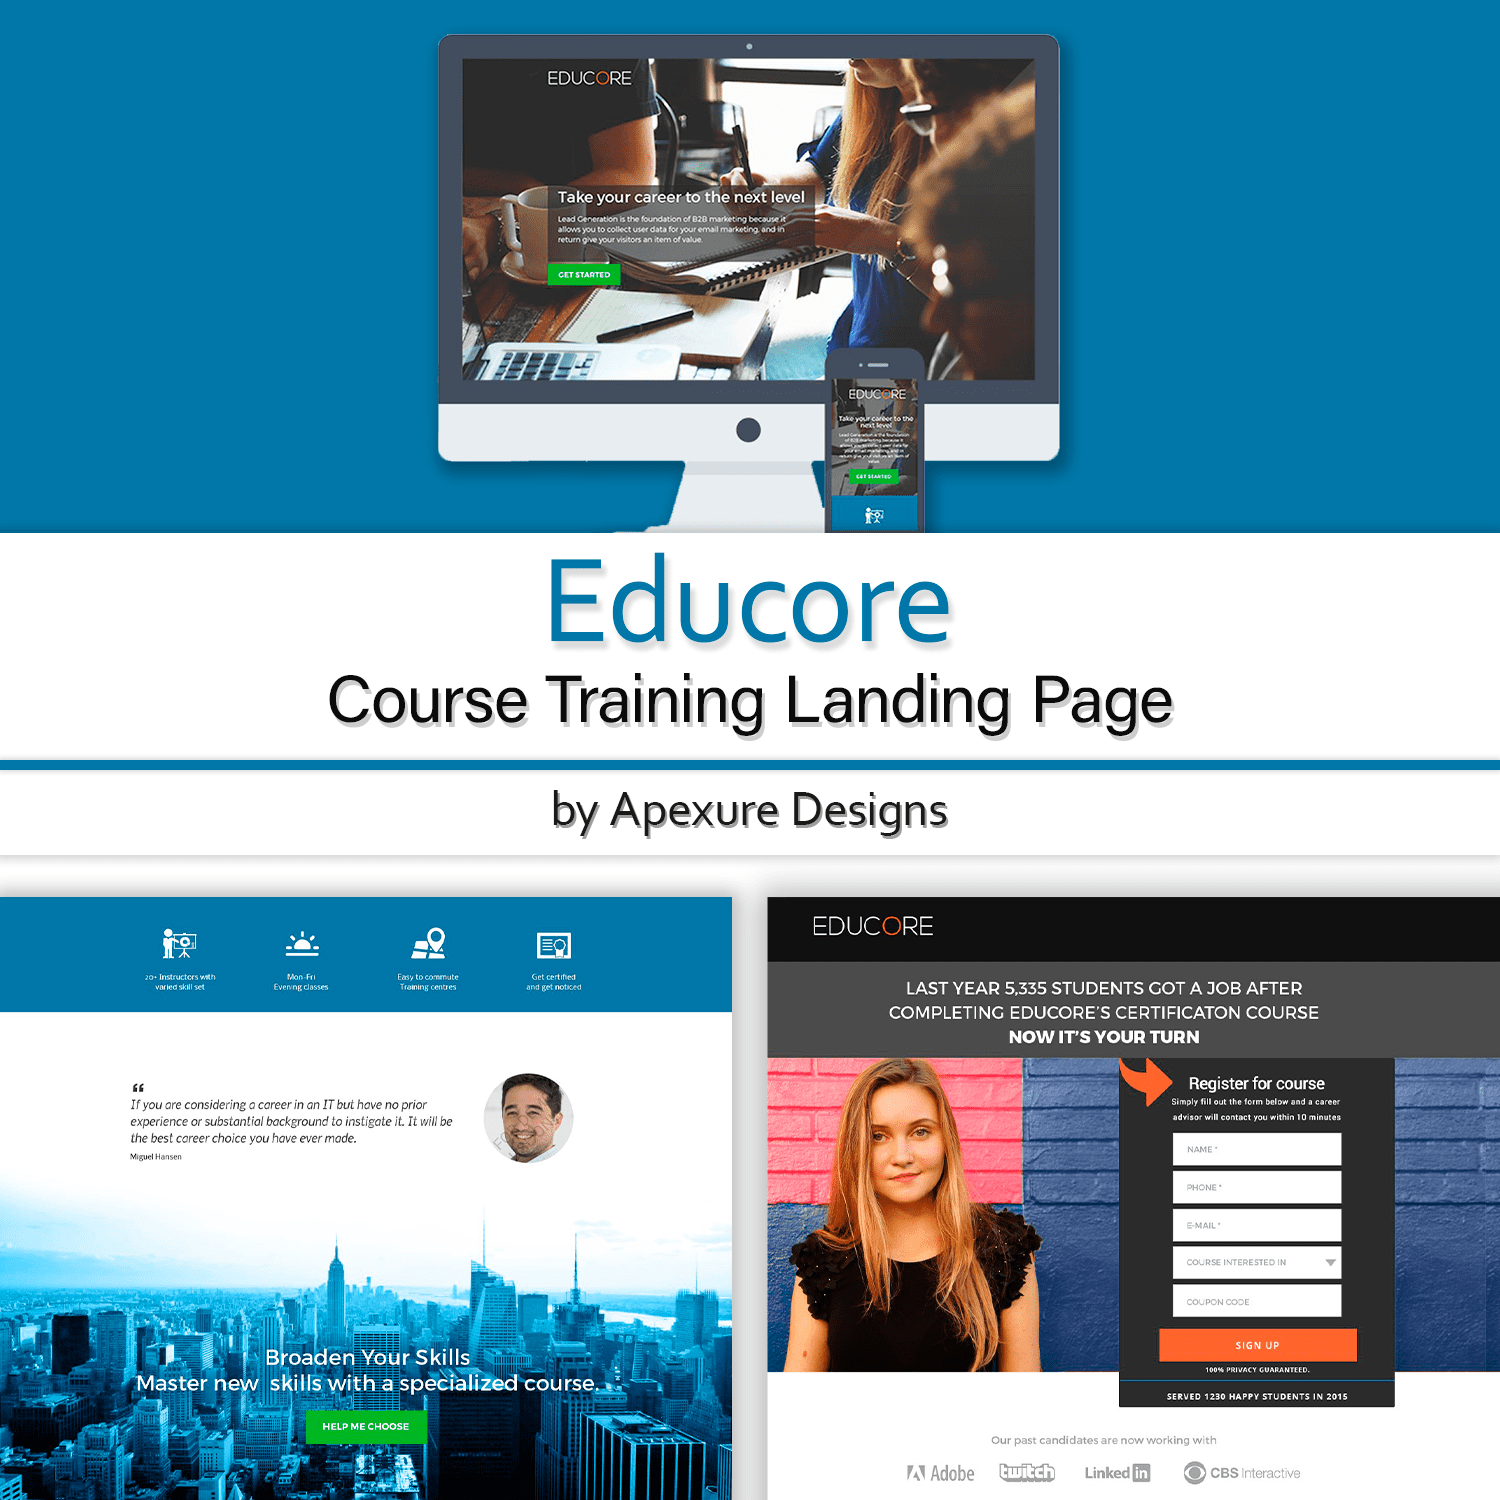 Educore Course Training Landing Page.